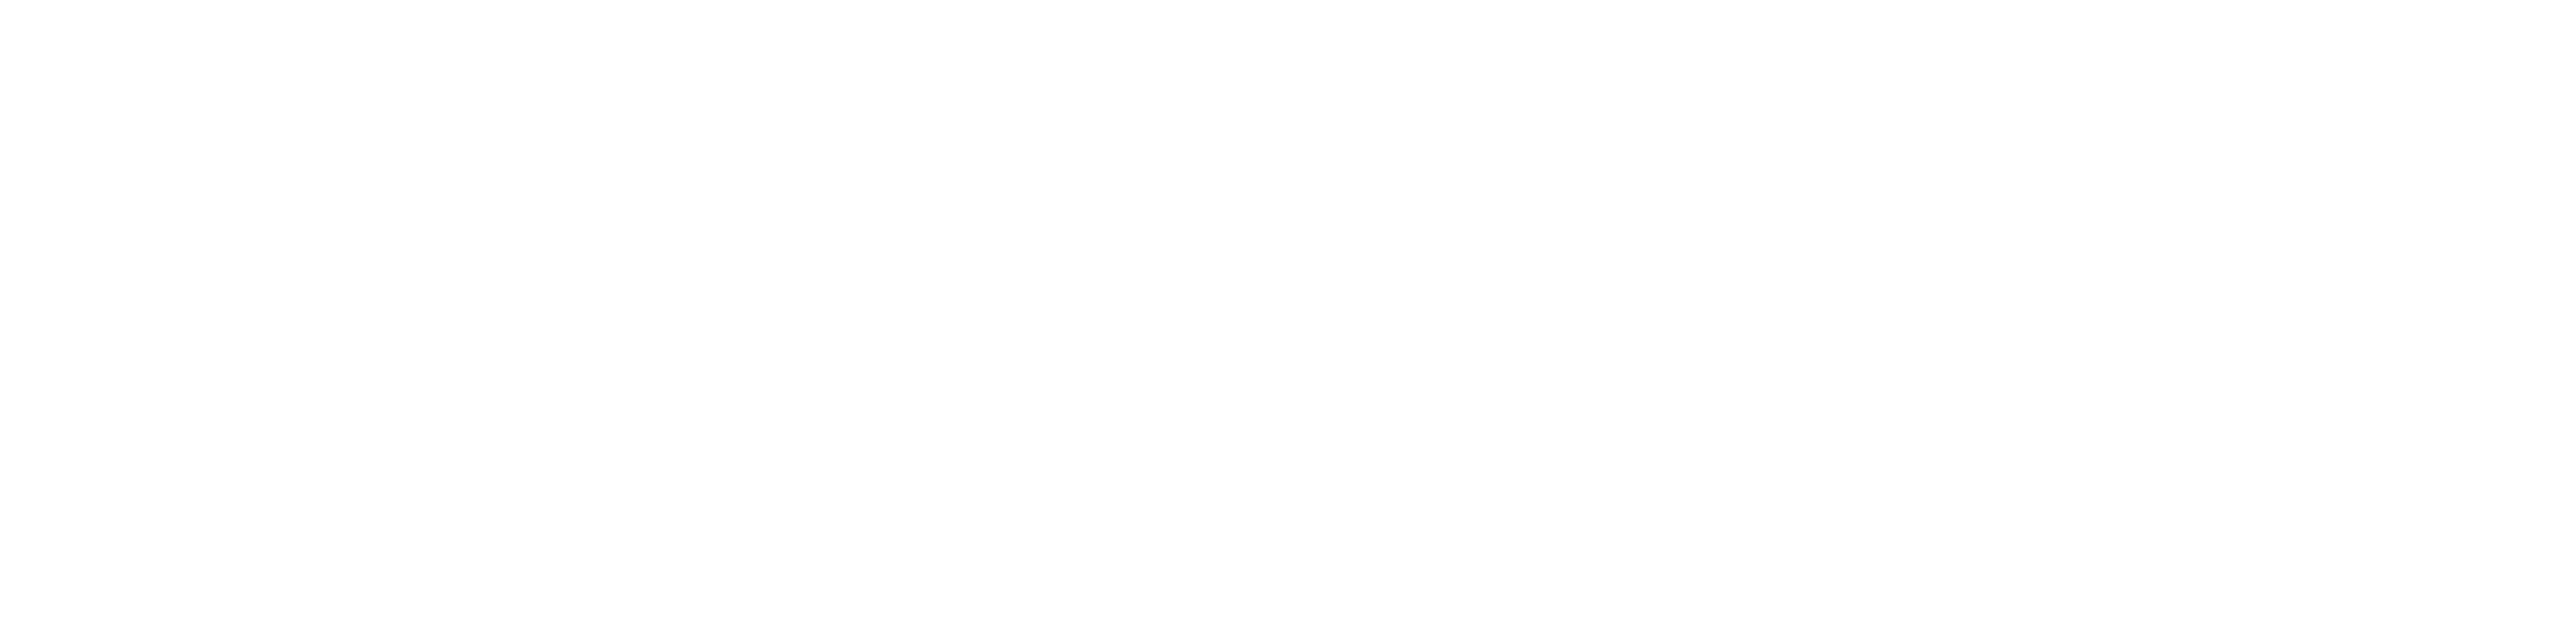 Sandstone Technologies_logo_white